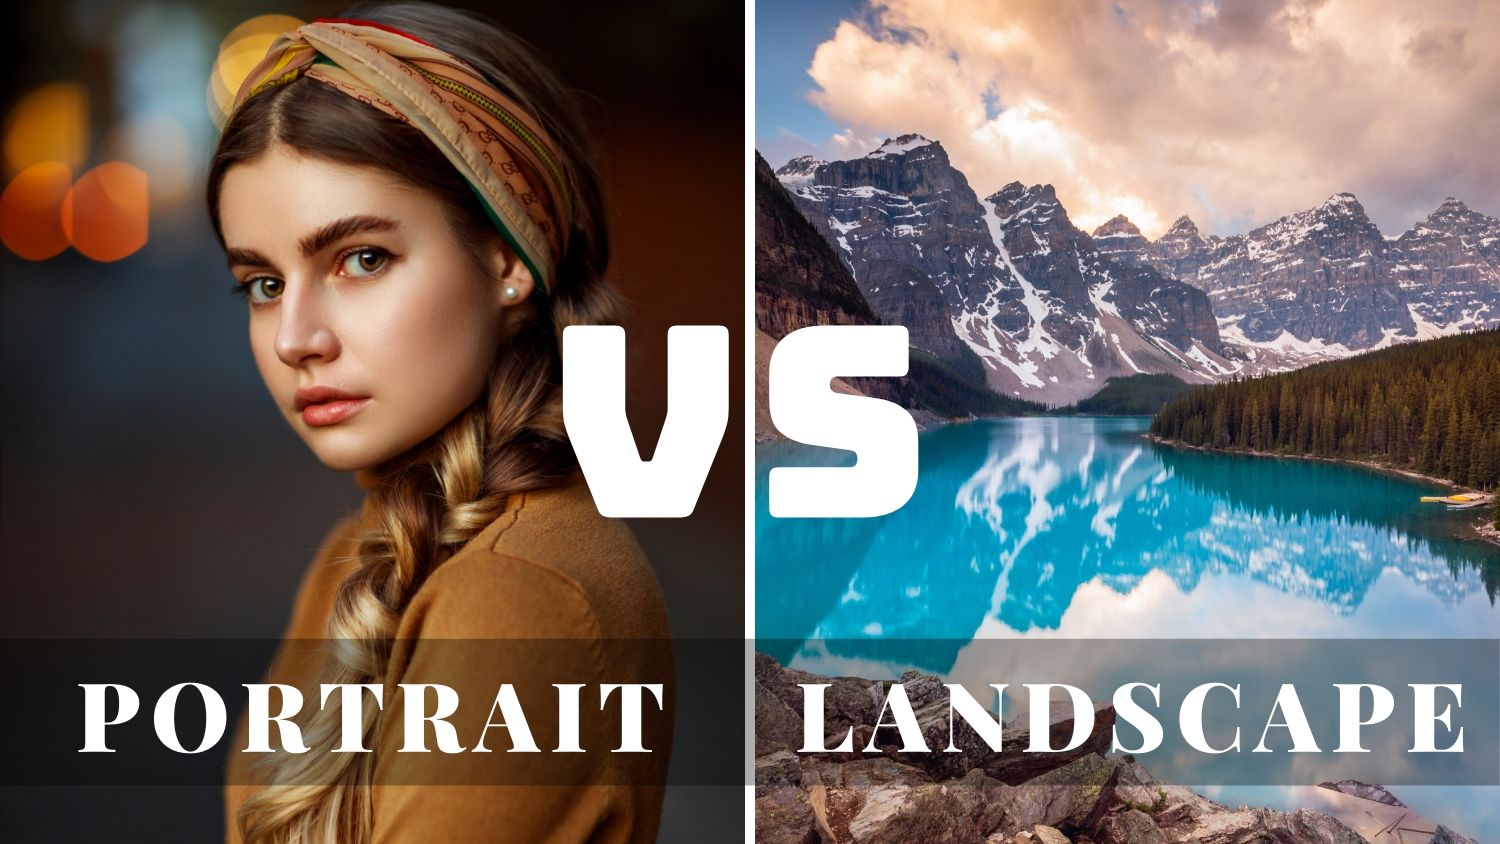 portrait vs landscape google presentation